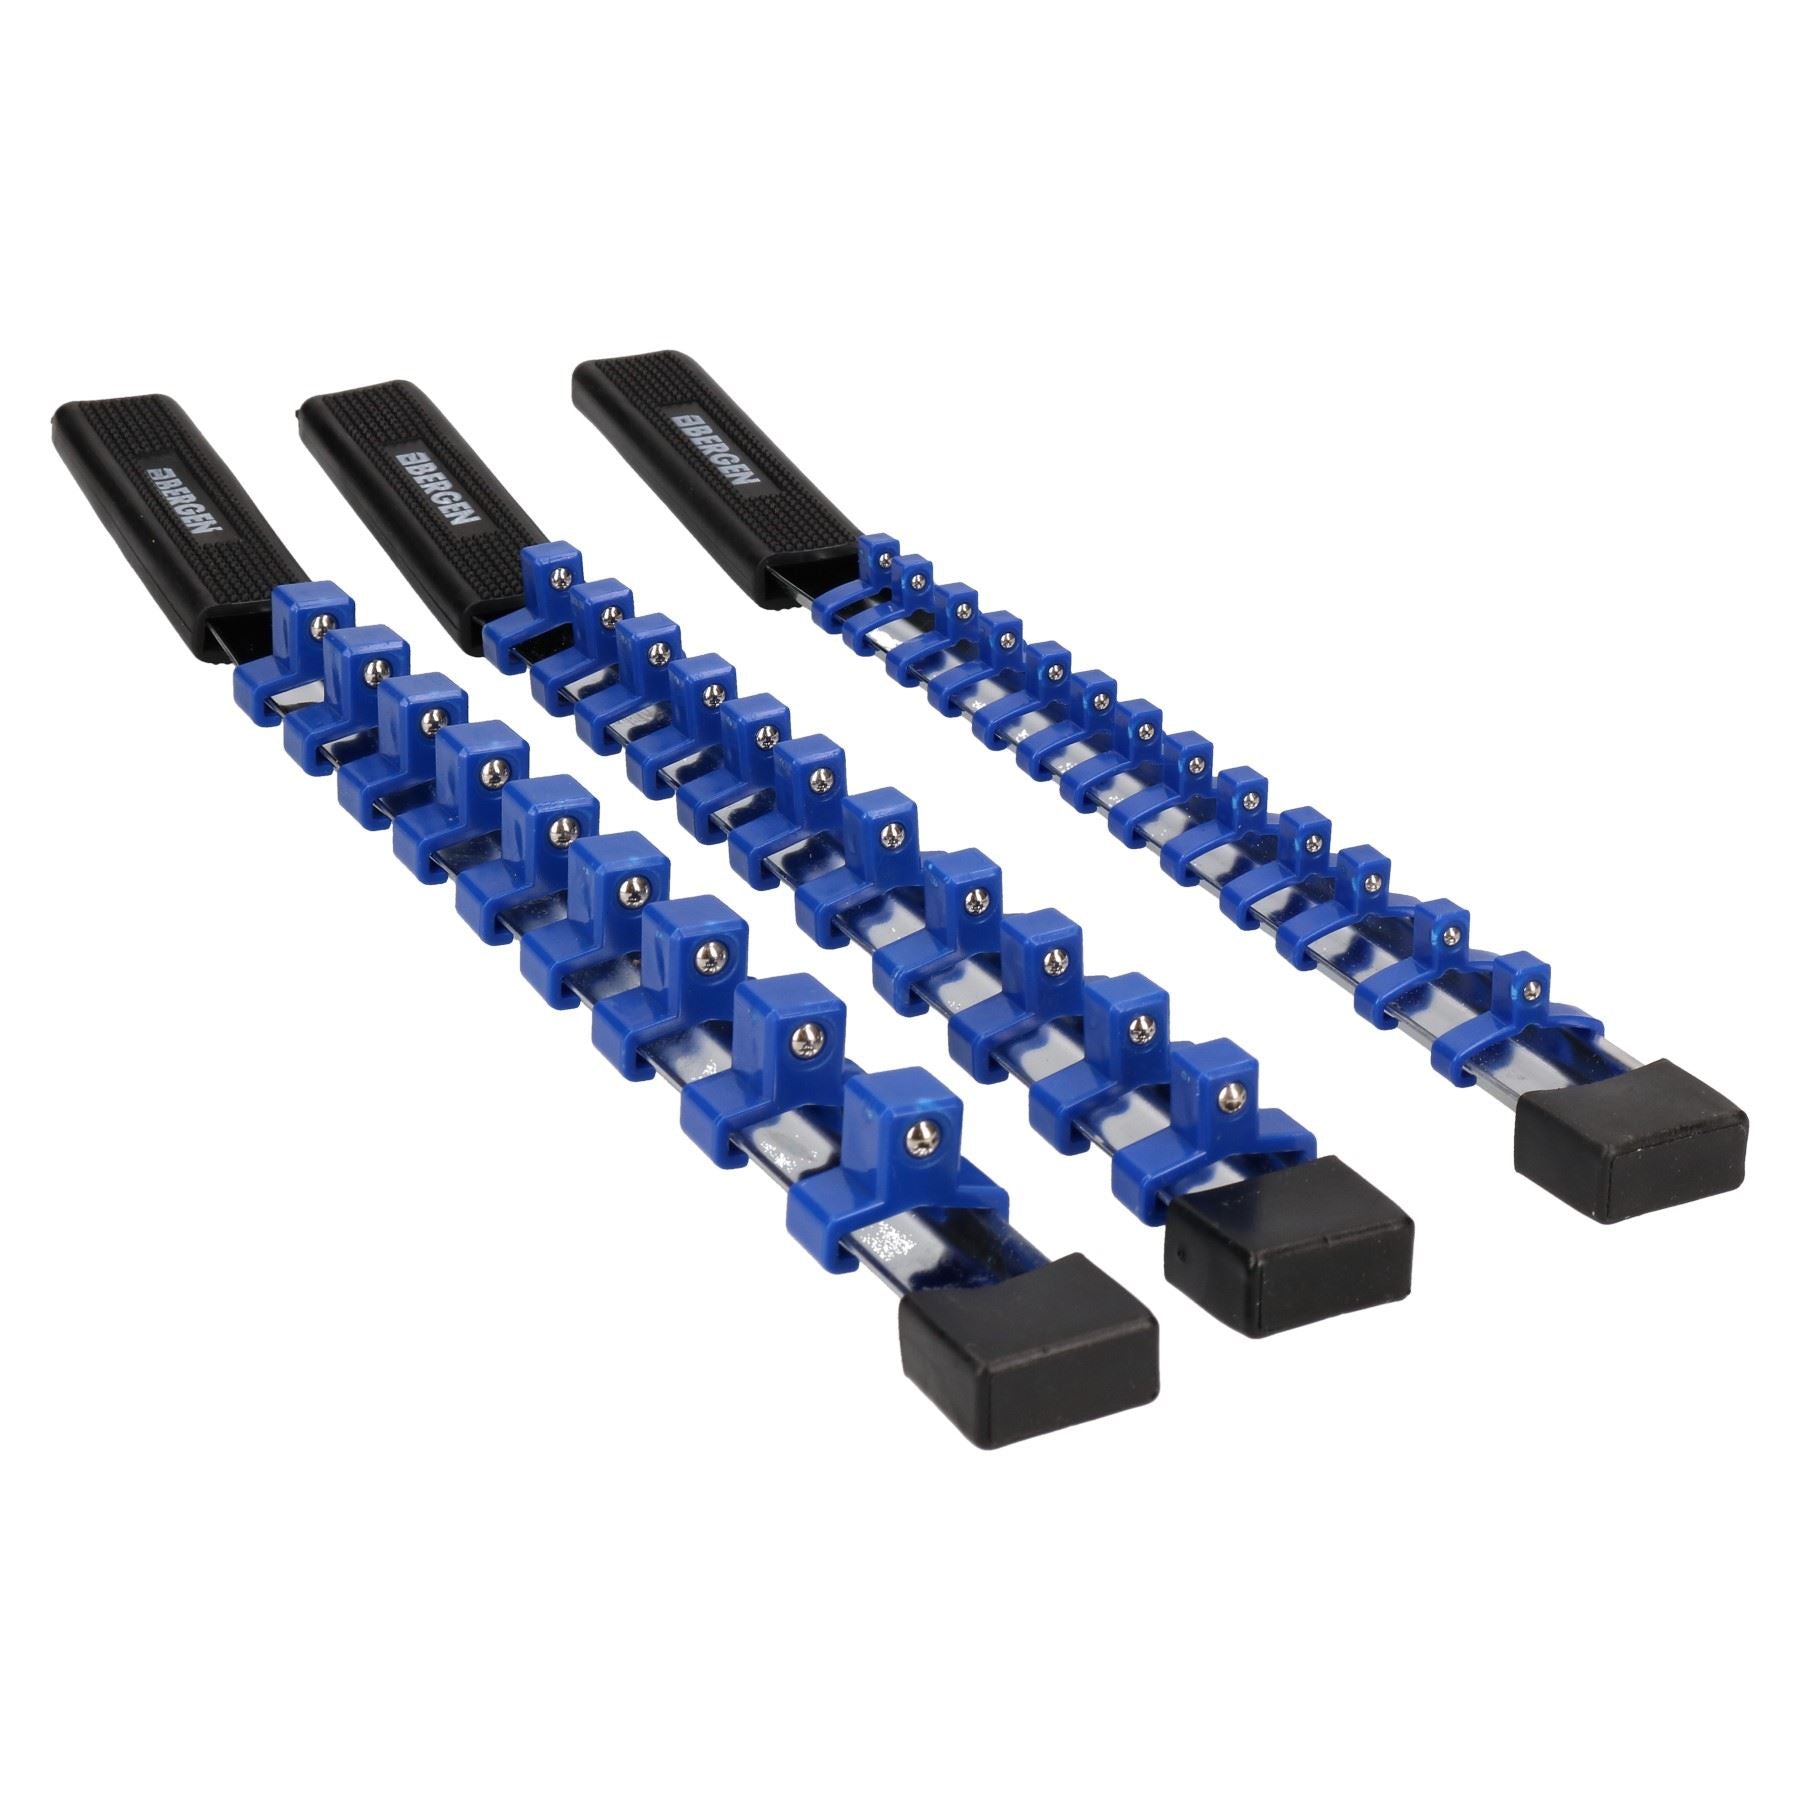 3pc Socket Storage Holder Organiser Plastic Rails With Handles 1/4 3/8 1/2 Drive